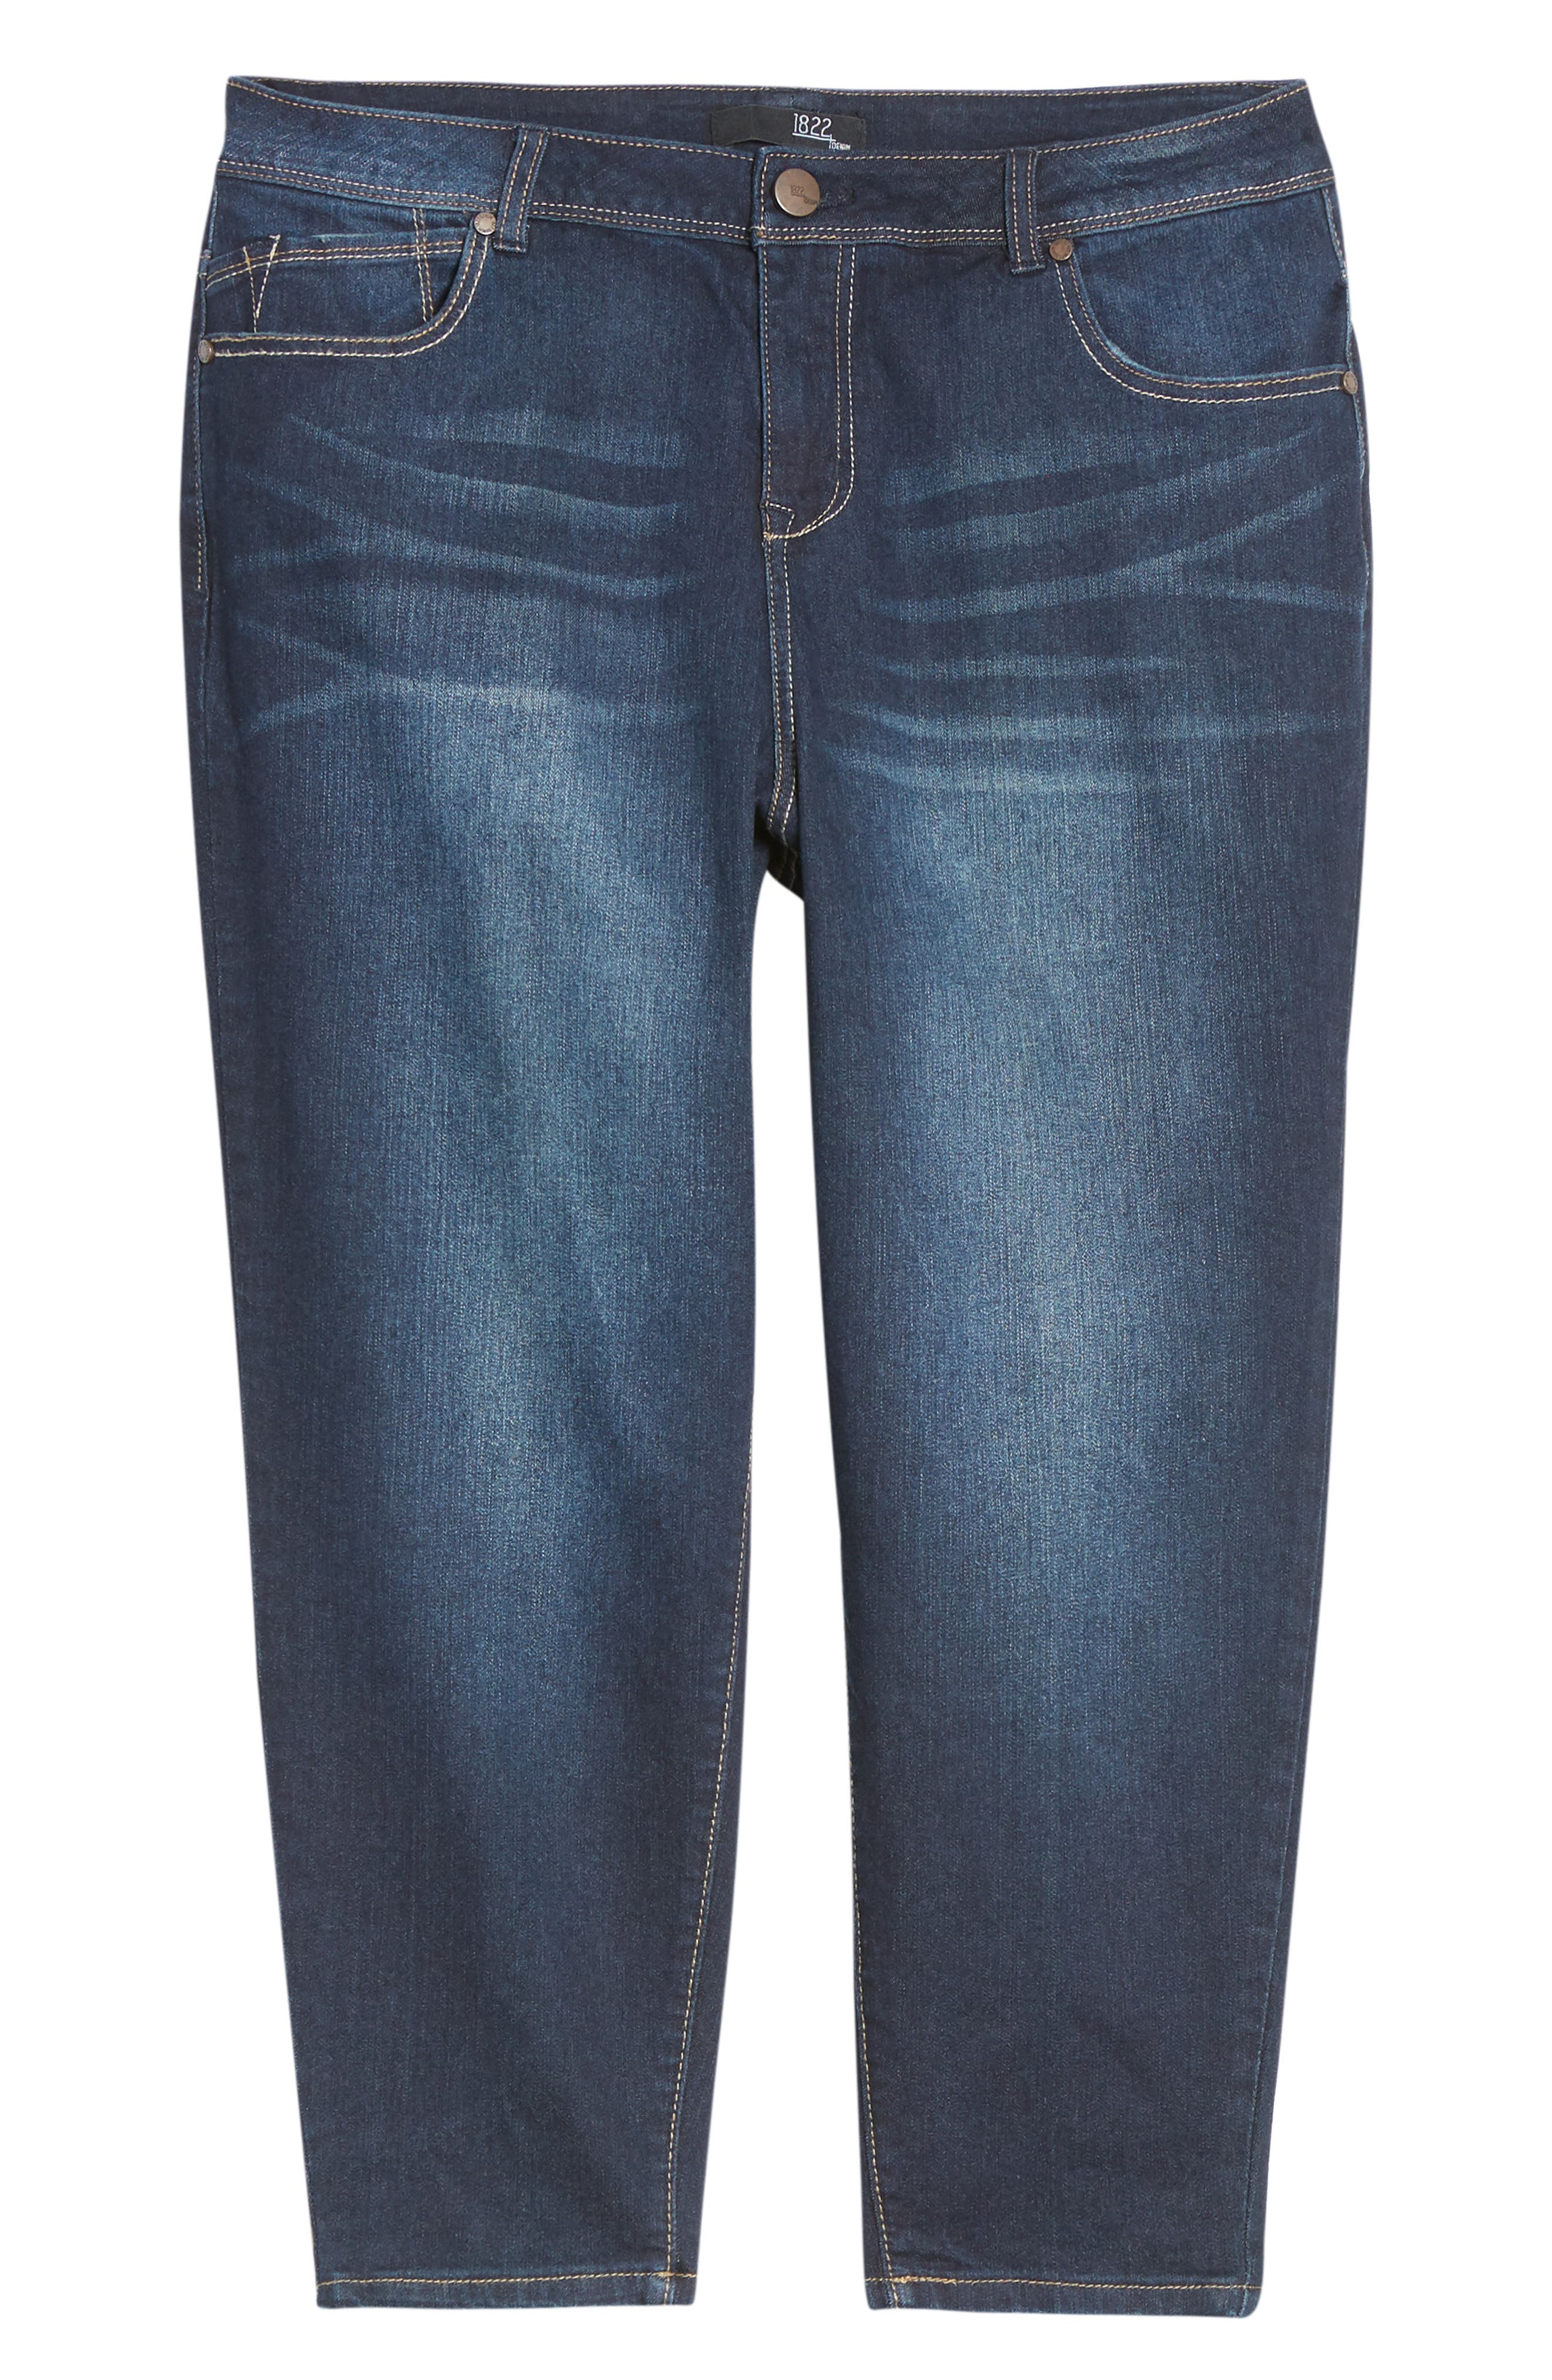 1822 capri jeans